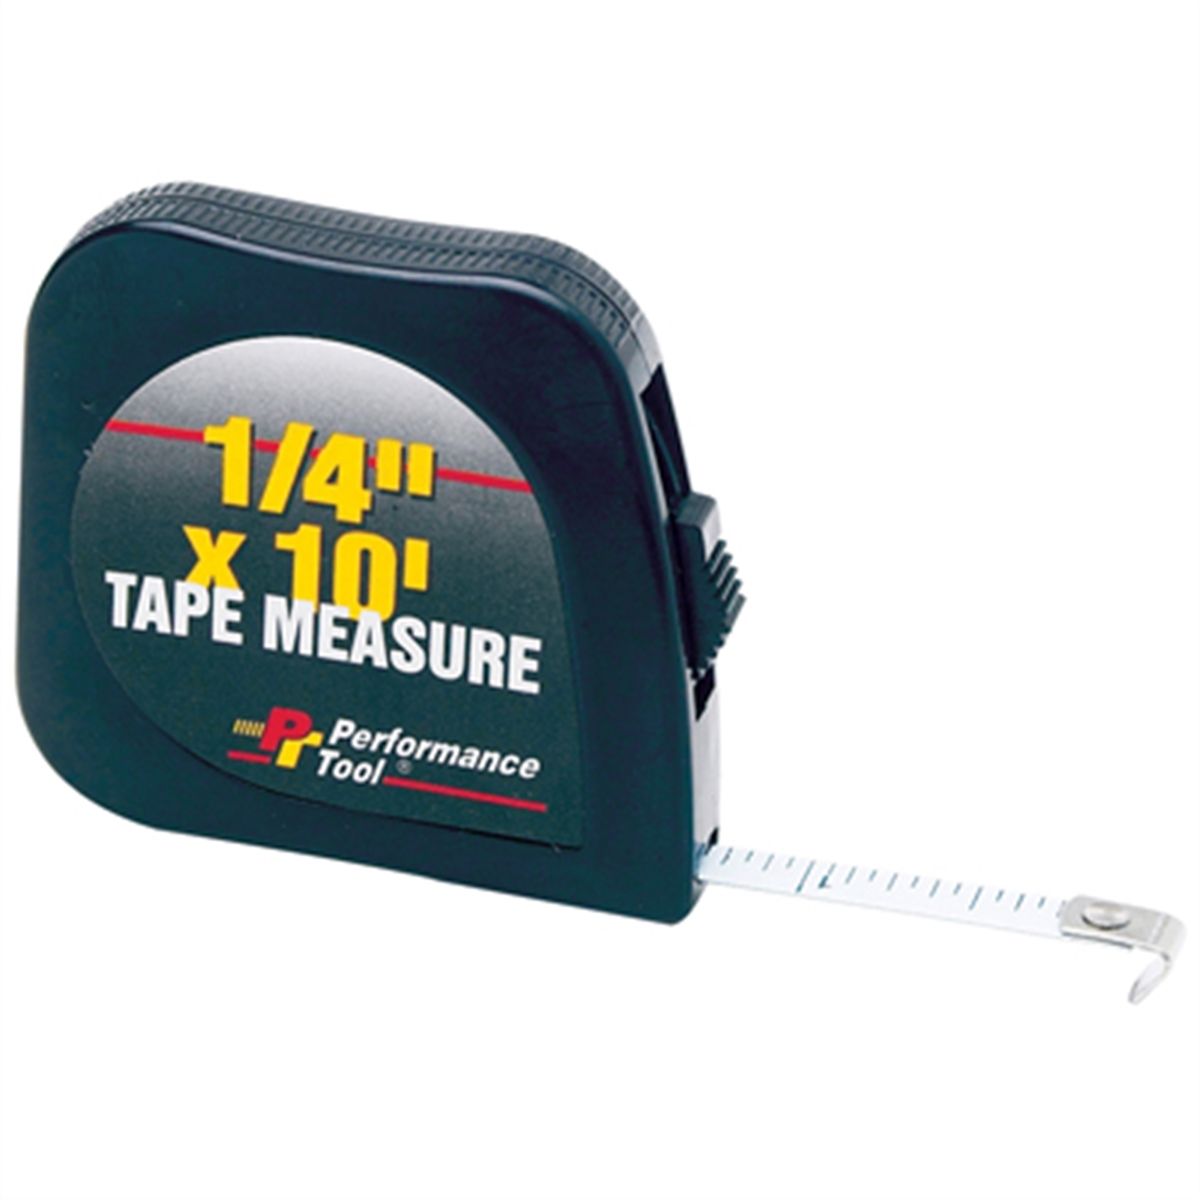 1/4'' x 10' Tape Measure